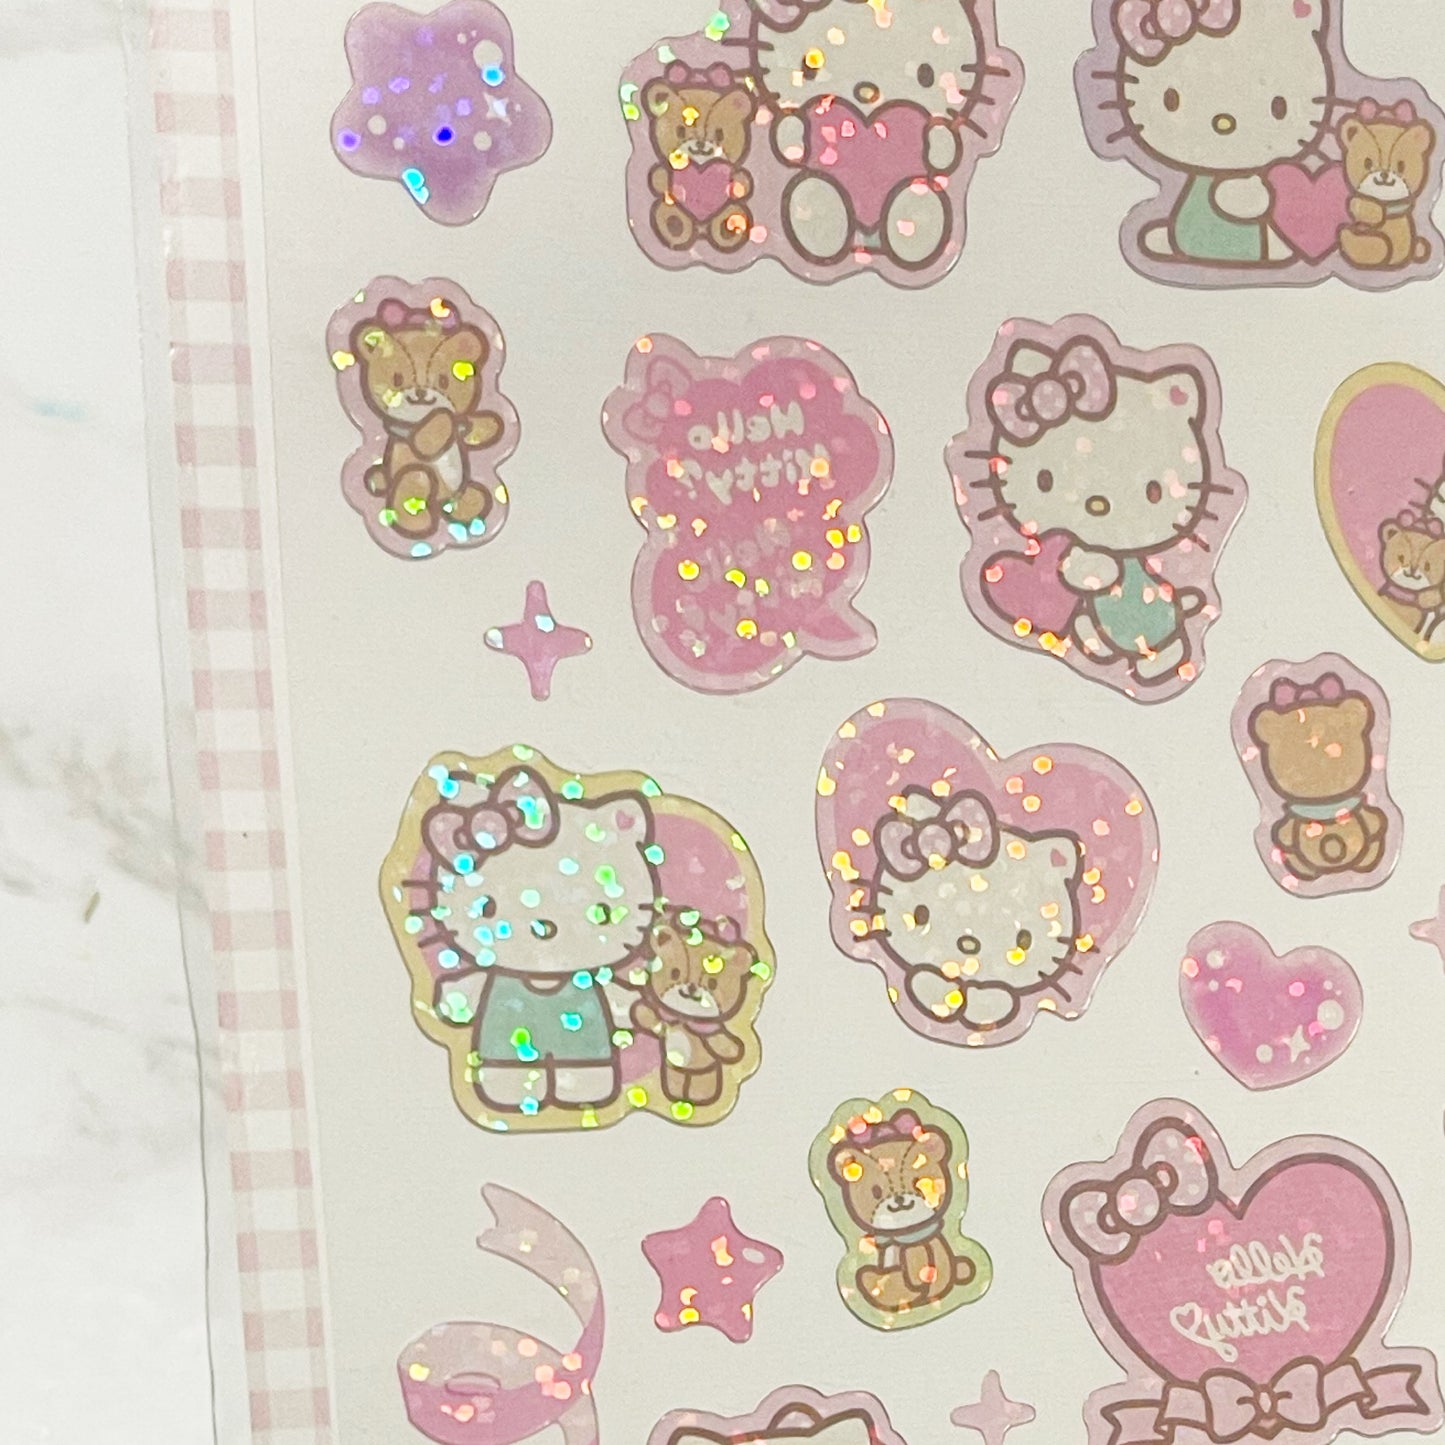 Sanrio sticker sheets